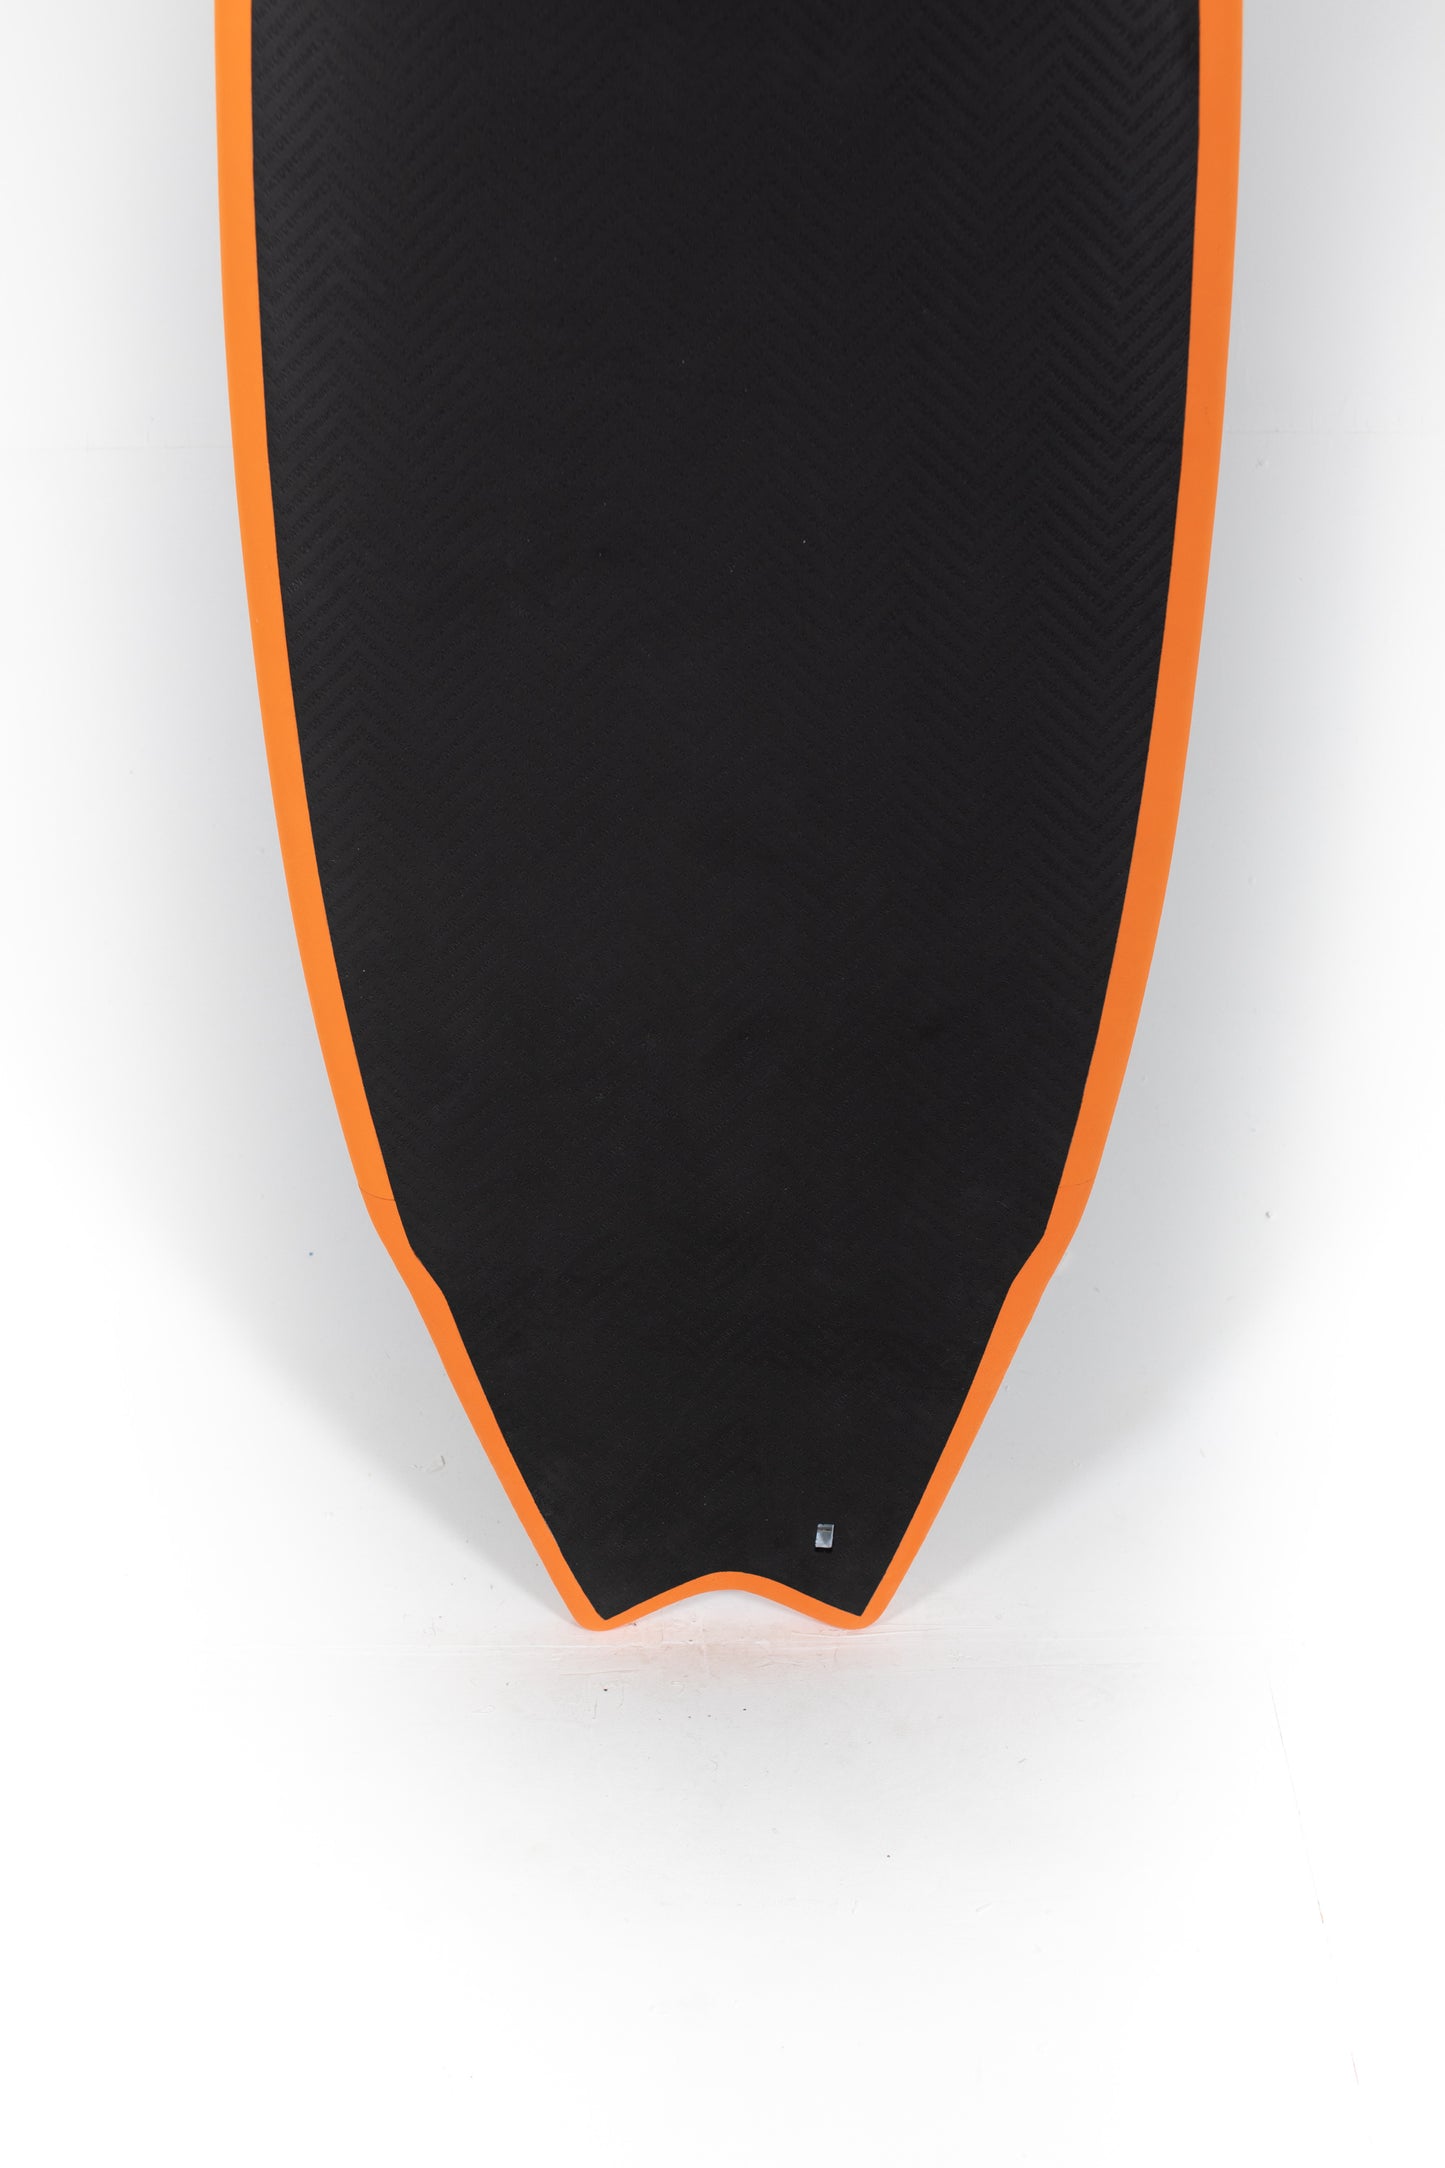 
                  
                    Pukas Surf Shop - HaydenShapes Surfboard - WEIRD WAVES SOFT - 5'4" x 20" x 2 1/2" x 29L - ESOFTWSDG-FU
                  
                